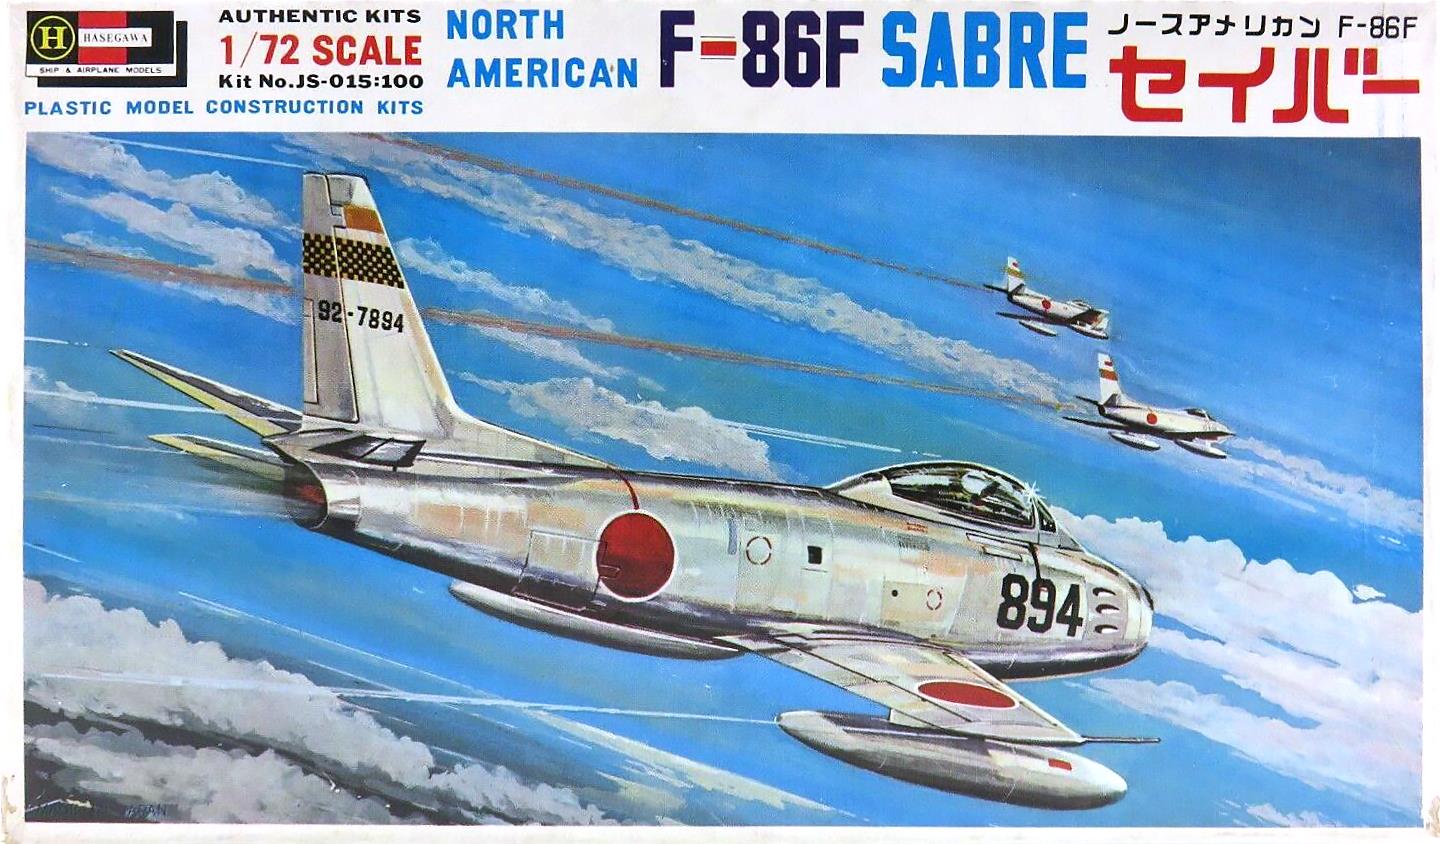  Коробка Hasegawa JS-015 North American F-86F Sabre JASDF, 1966